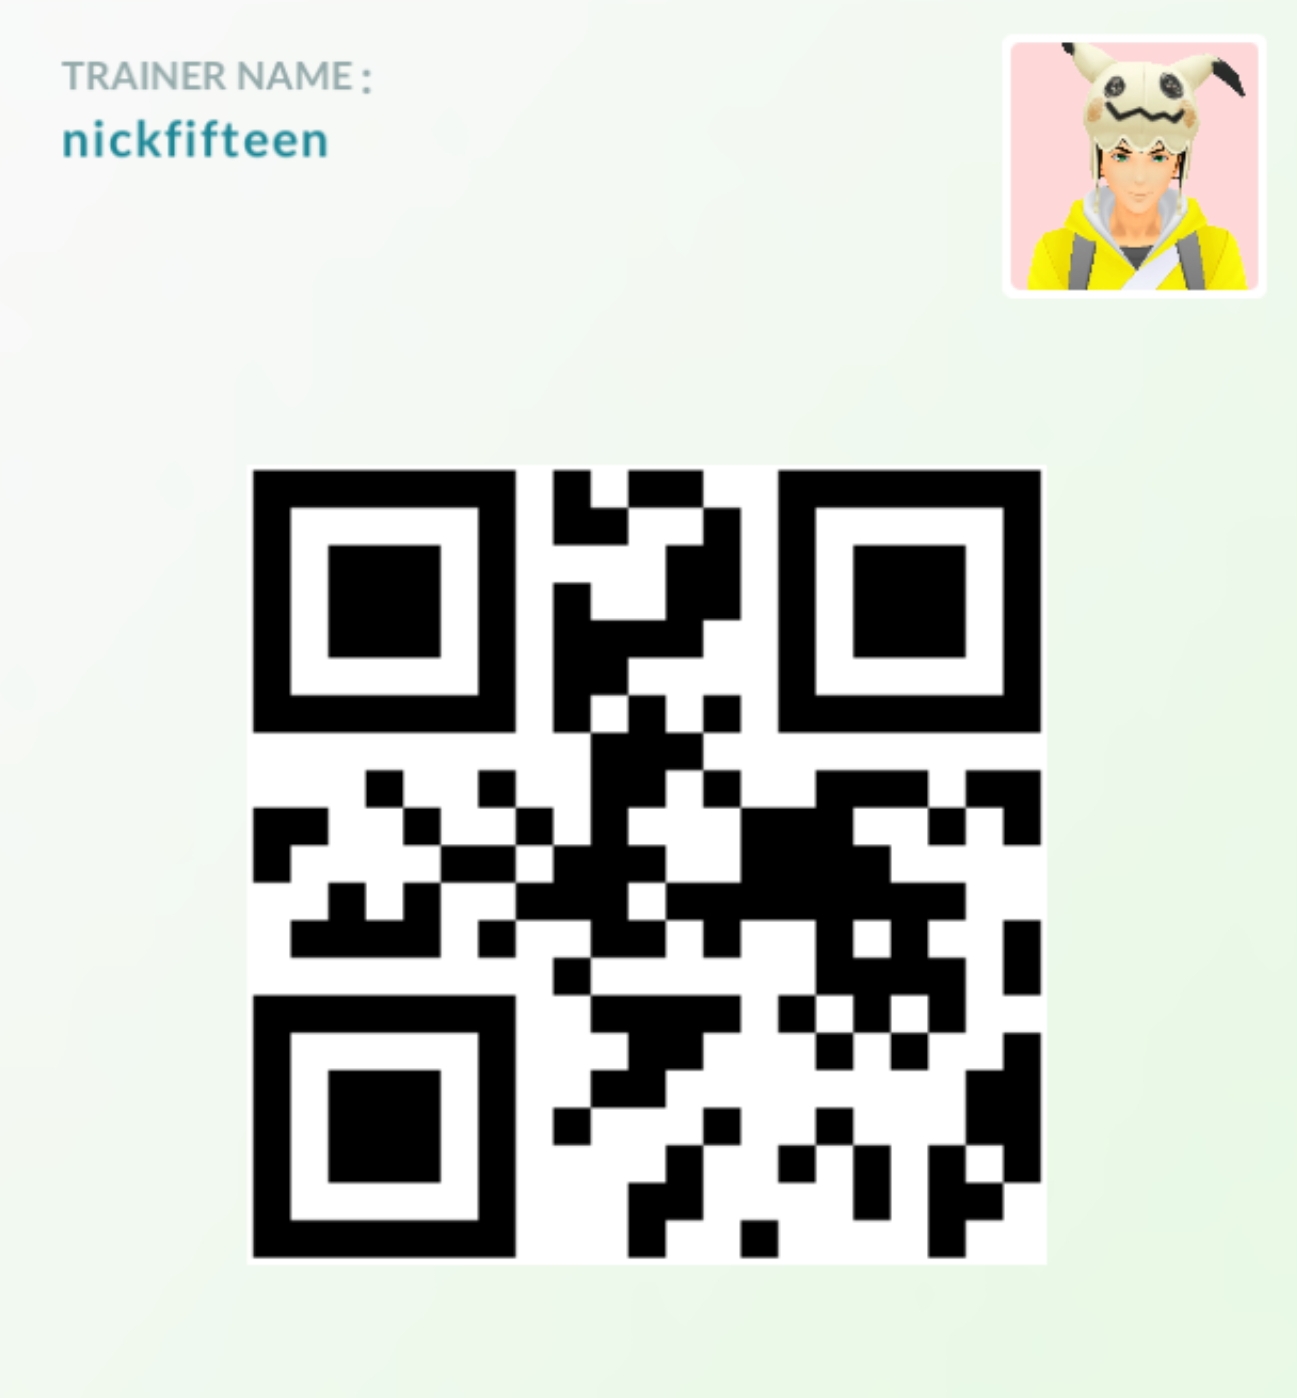 Pokémon GO Trainer Code: 5759 5828 8868